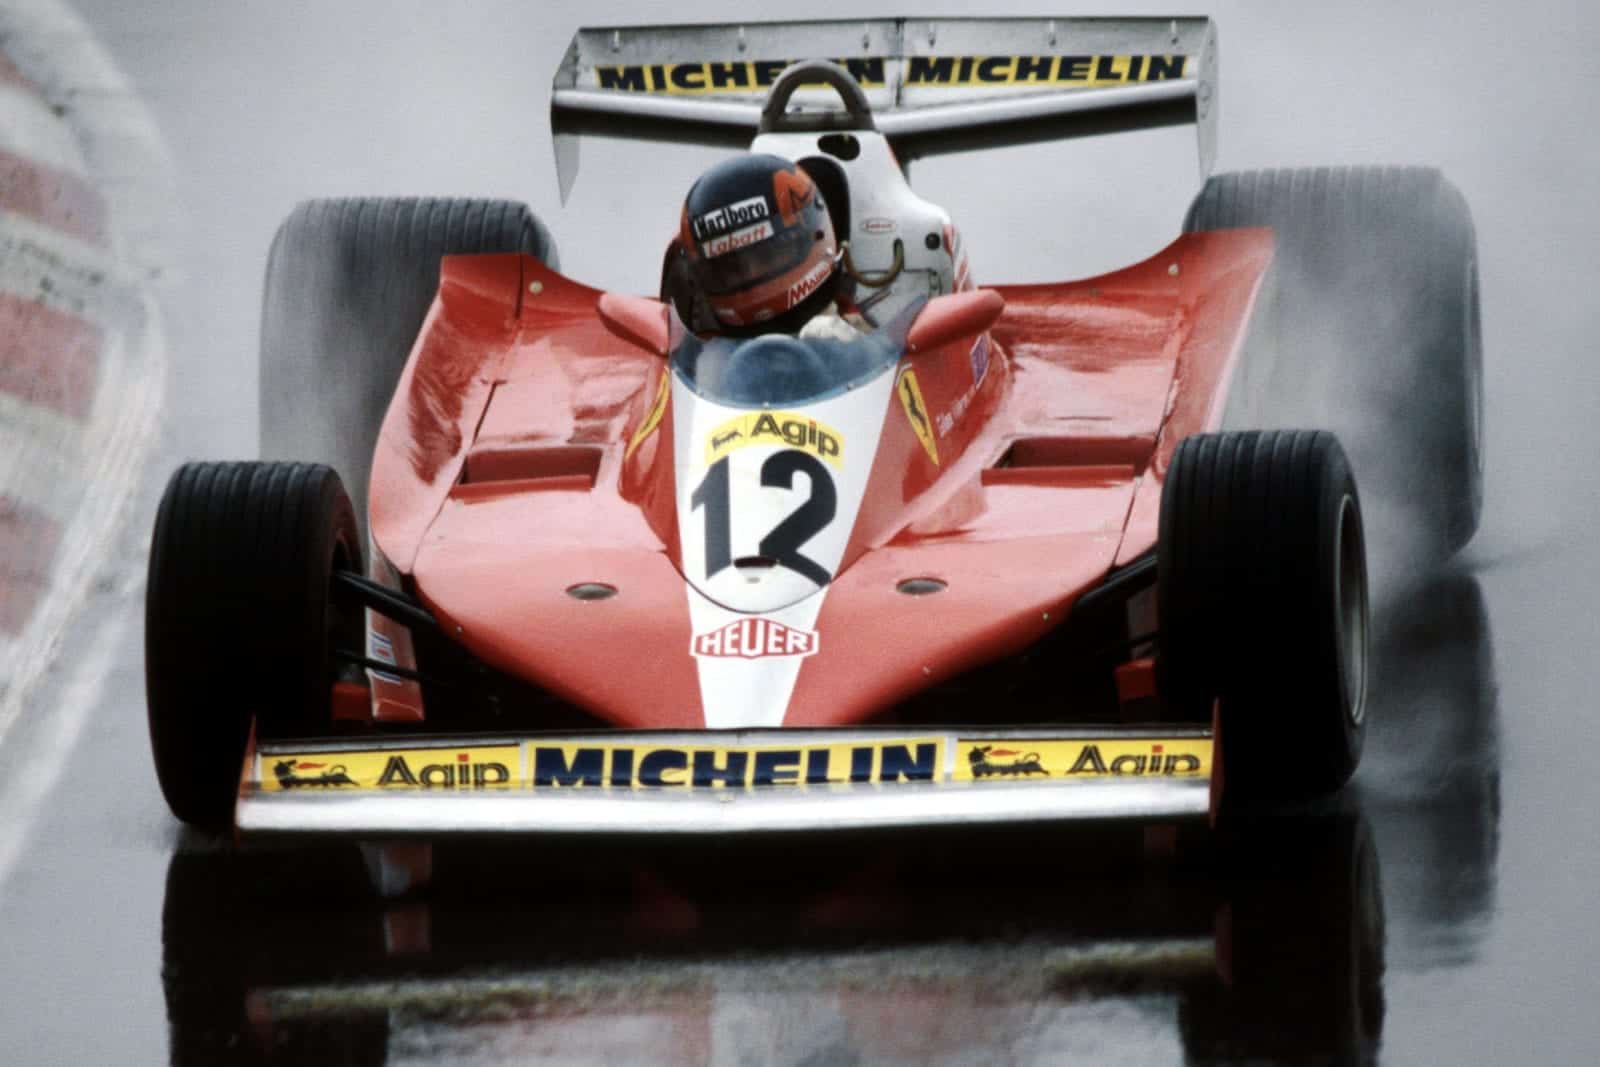 Gilles Villeneuve (Ferrari) at the 1978 Canadian Grand Prix, Montreal.